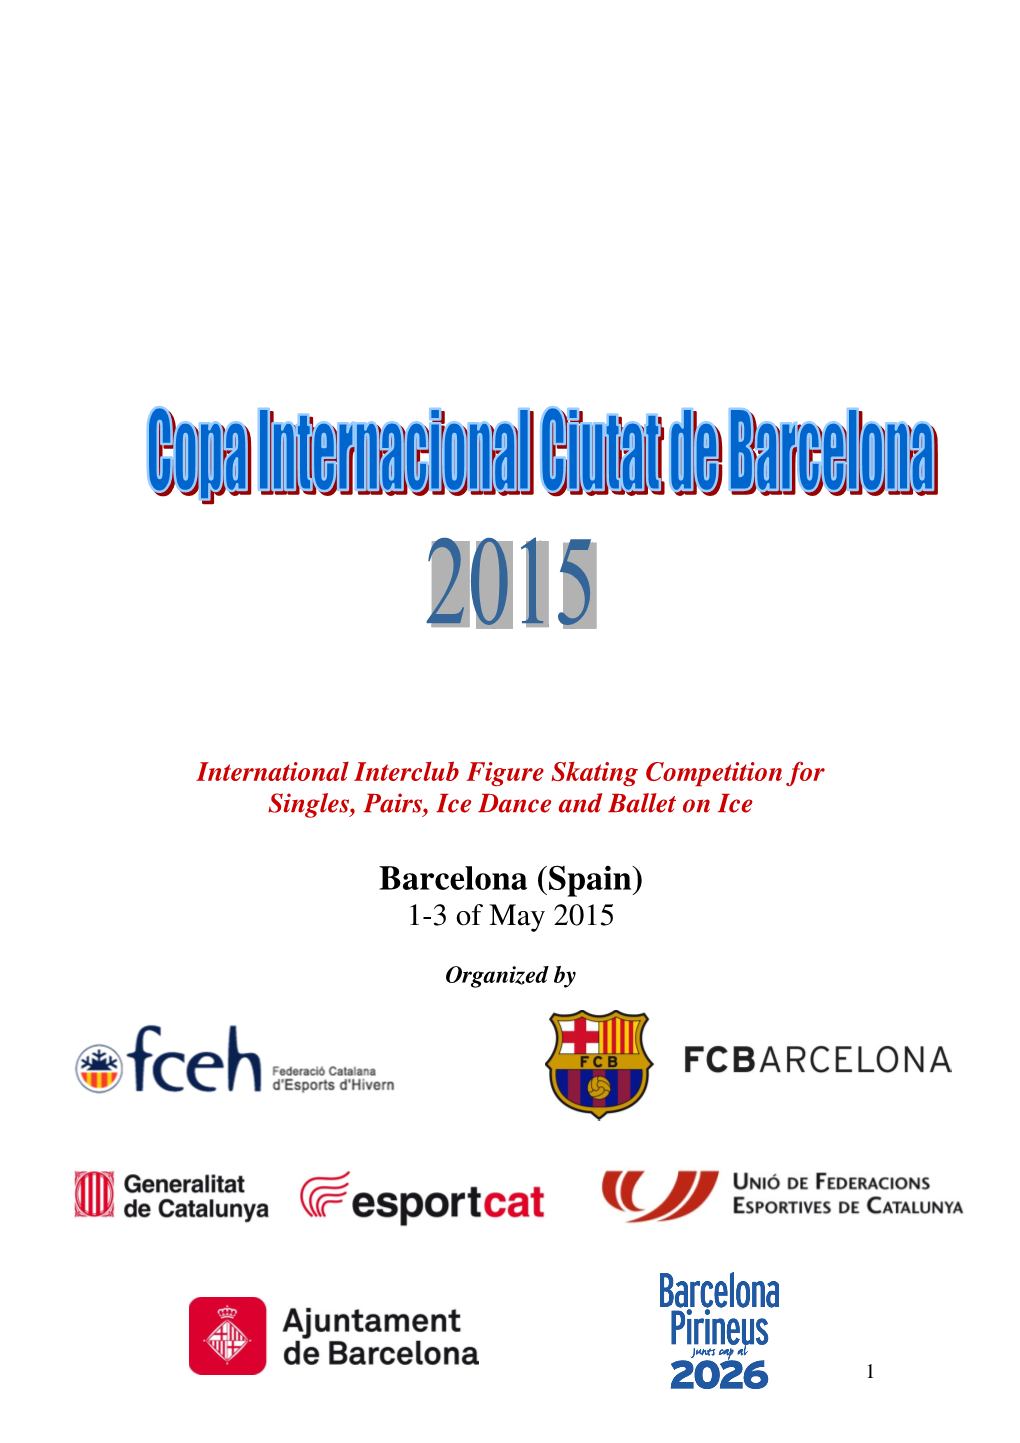 Barcelona (Spain) 1-3 of May 2015